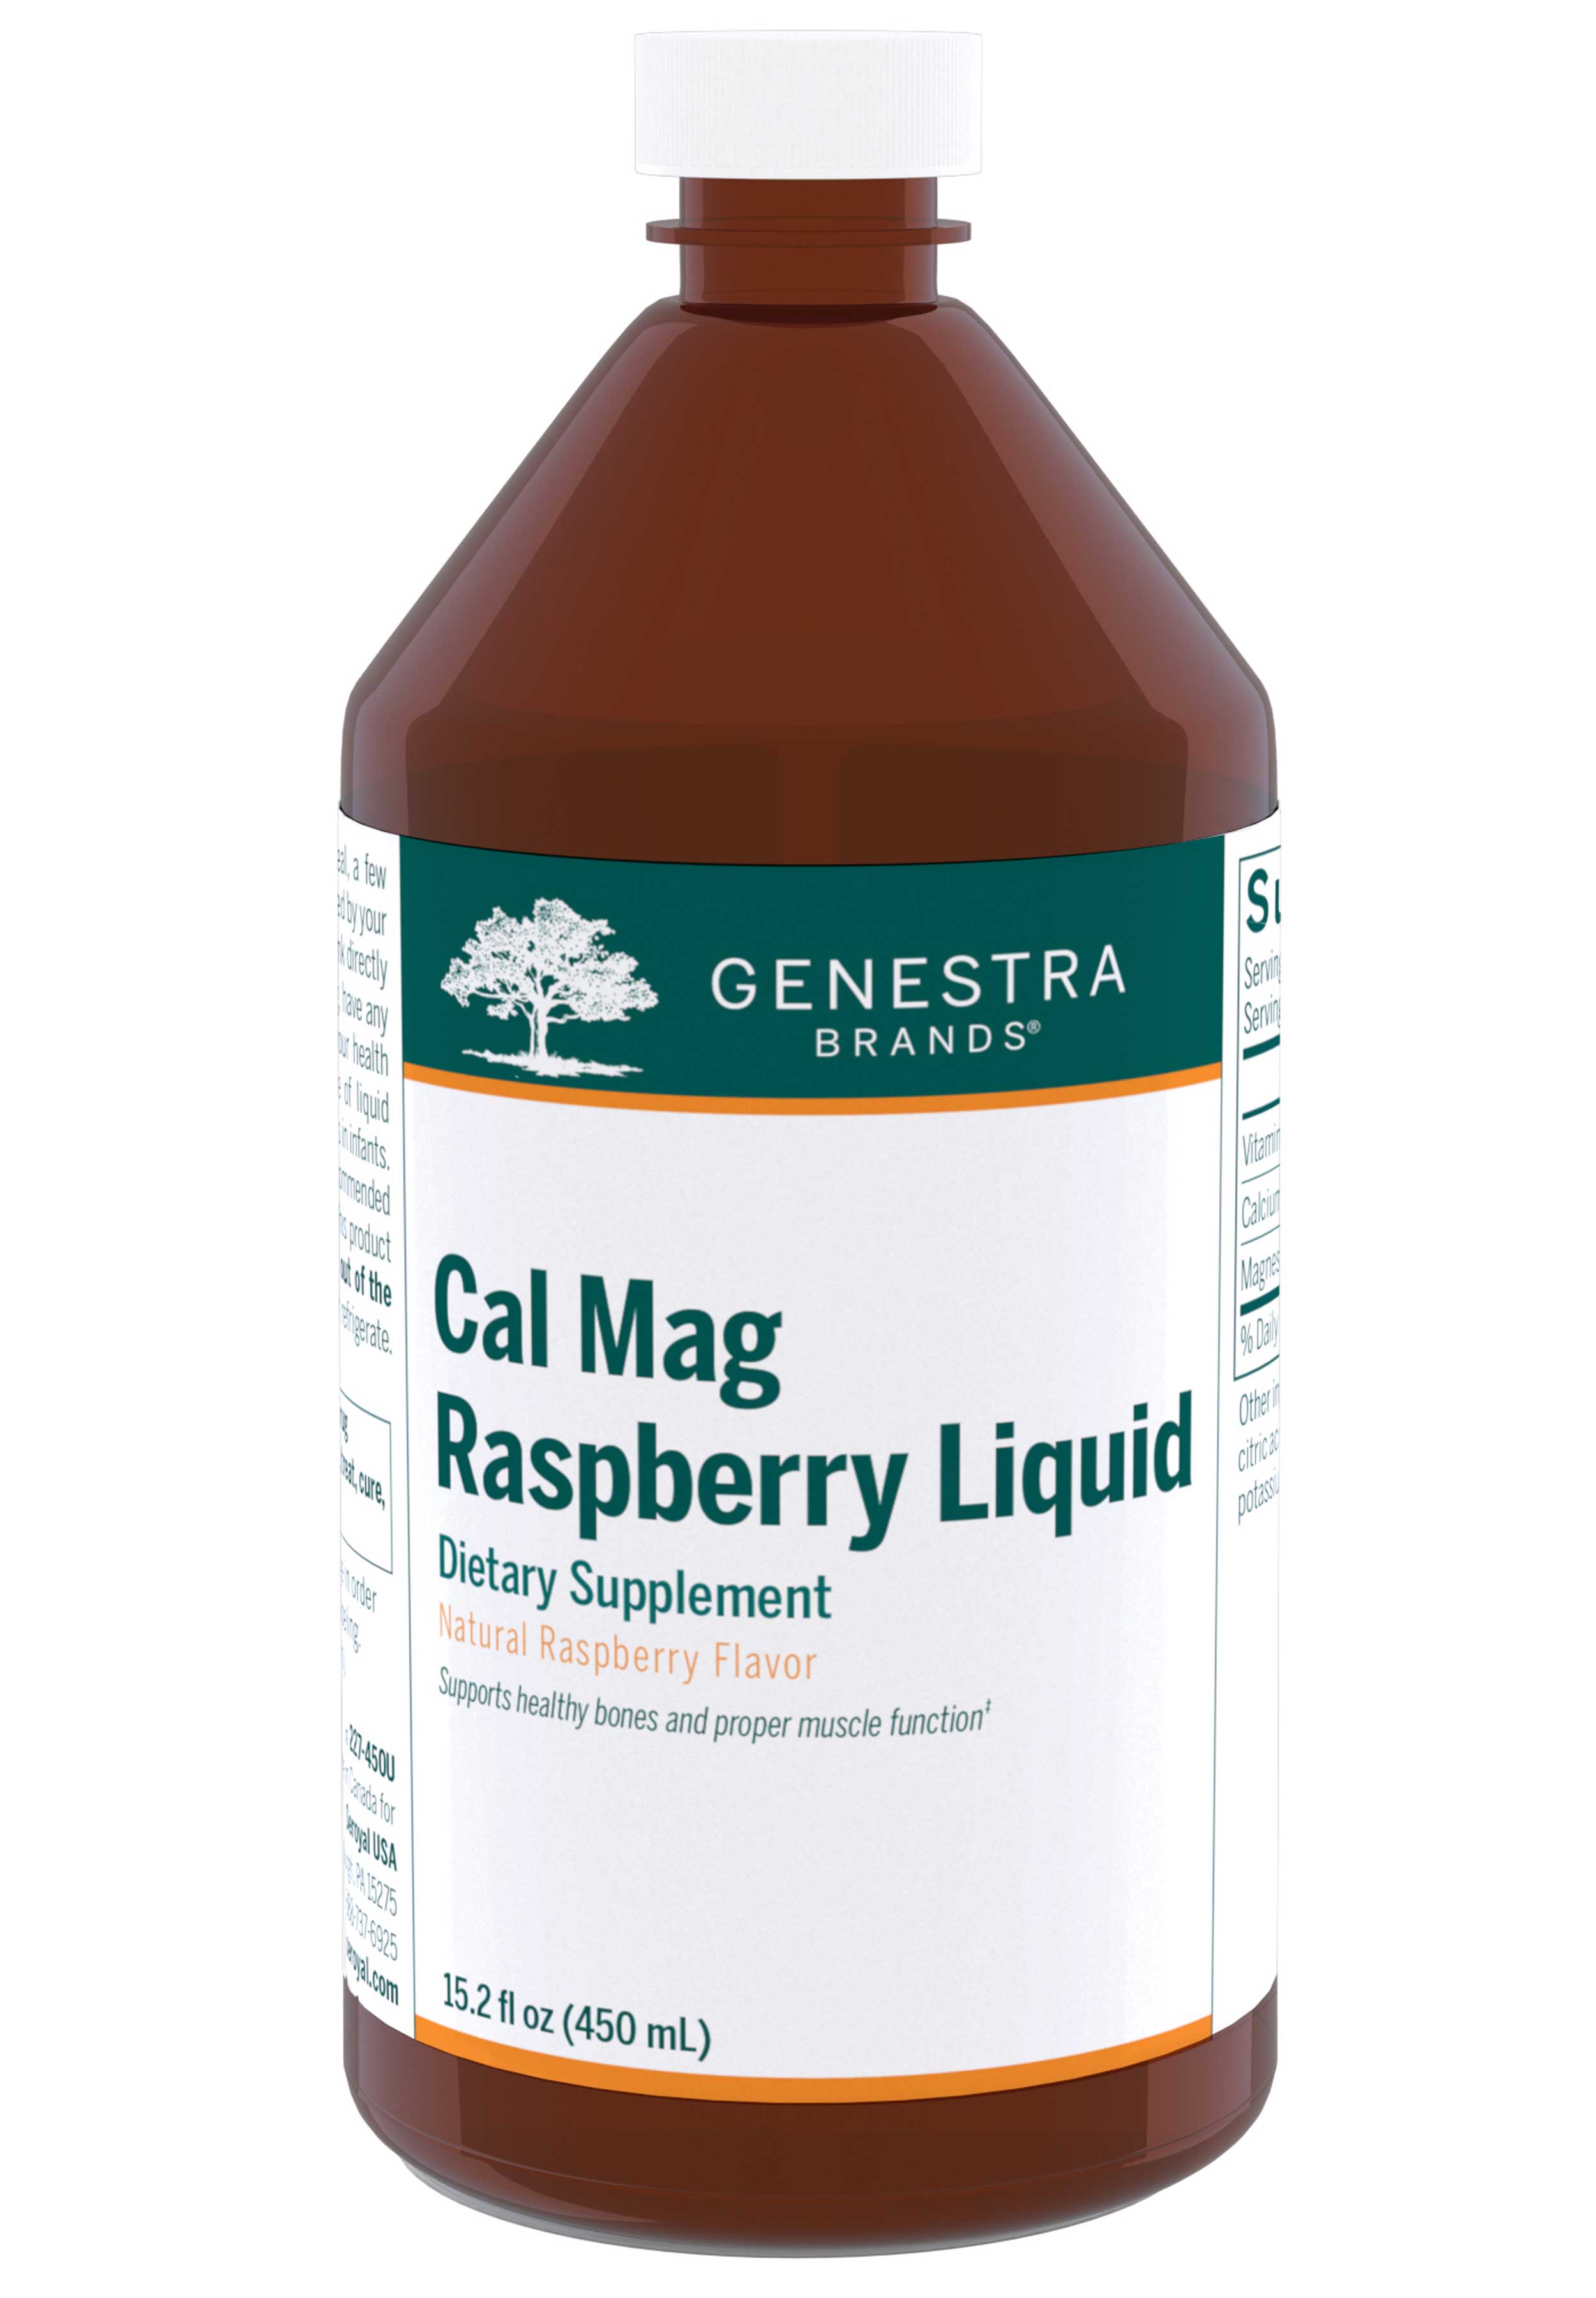 Genestra Brands Cal Mag Raspberry Liquid